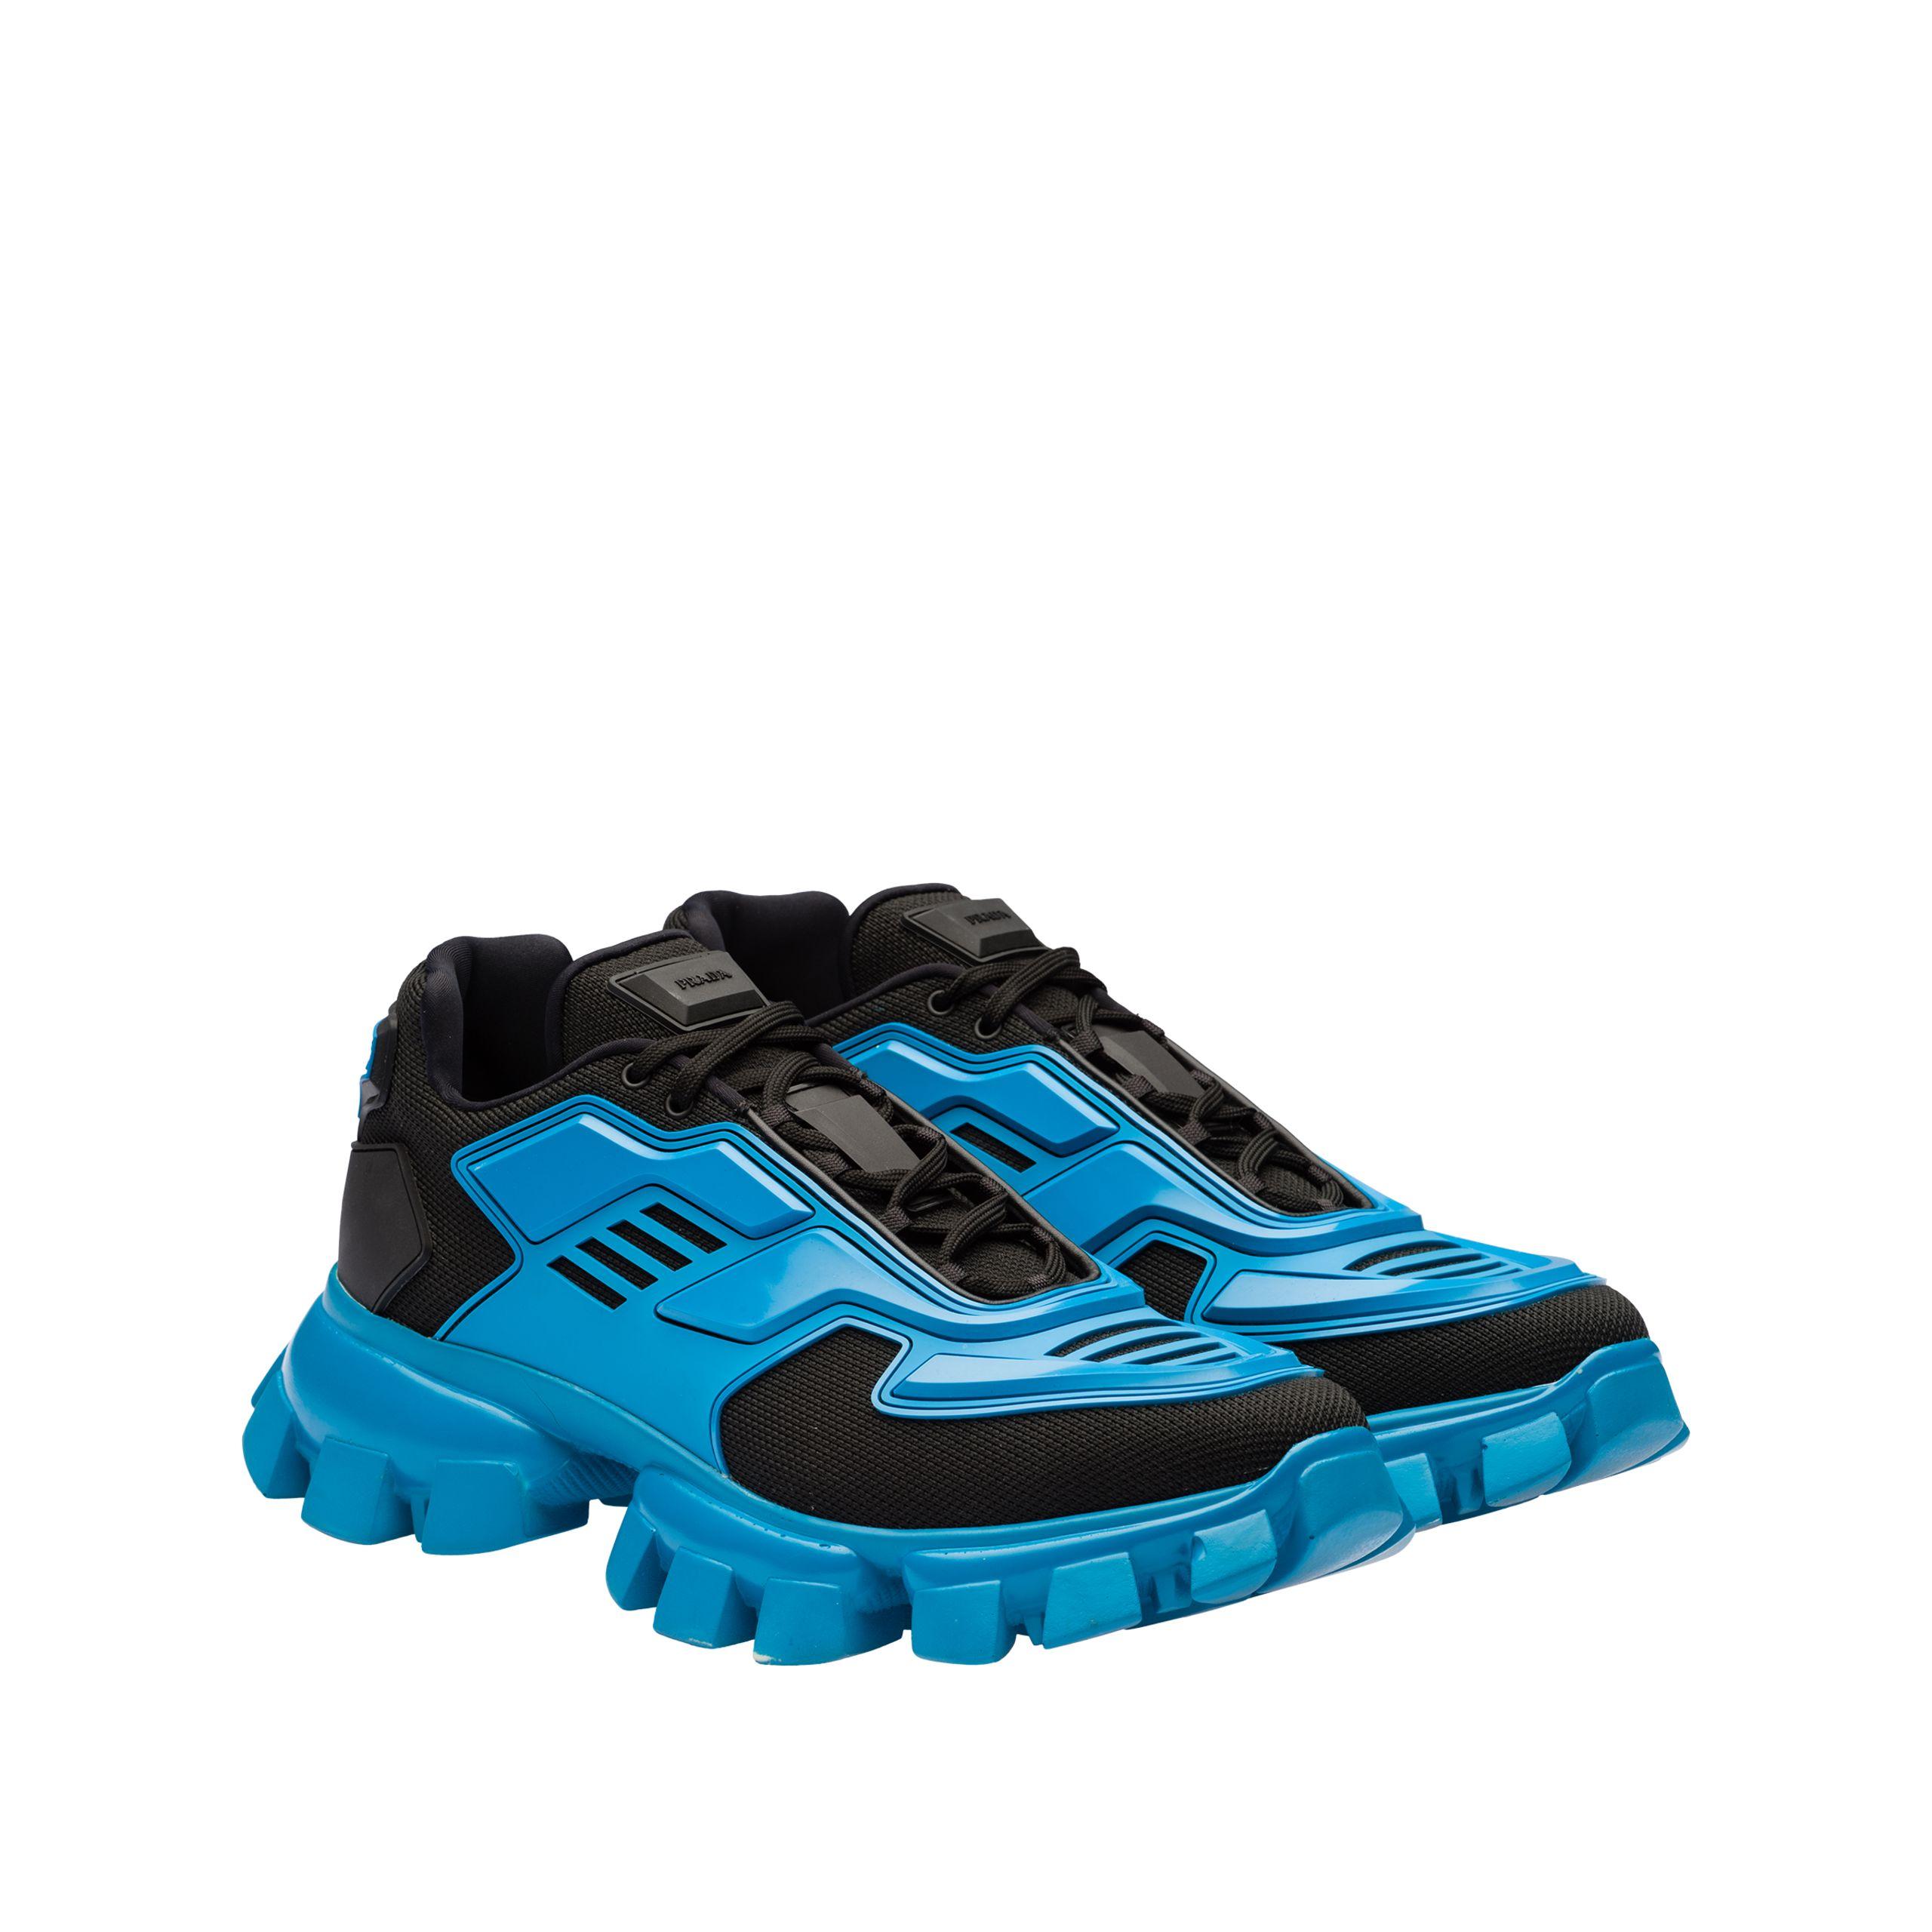 Lyst - Prada Cloudbust Thunder Knit Sneakers in Blue for Men